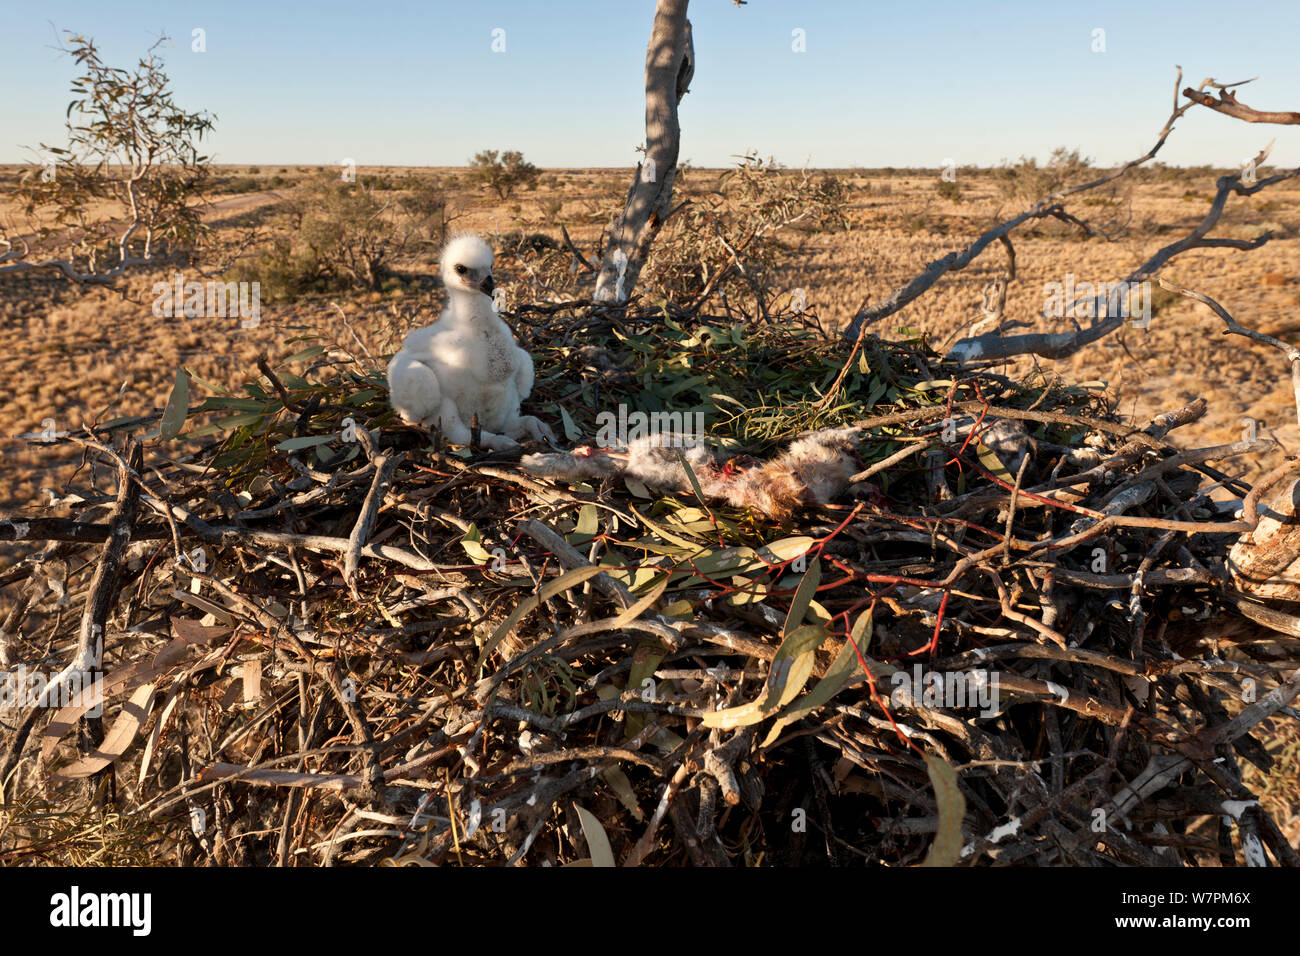 Wedge-tailed baby eagle (Aquila audax) on its nest with a rabbit prey, South Australia, Australia. Stock Photo